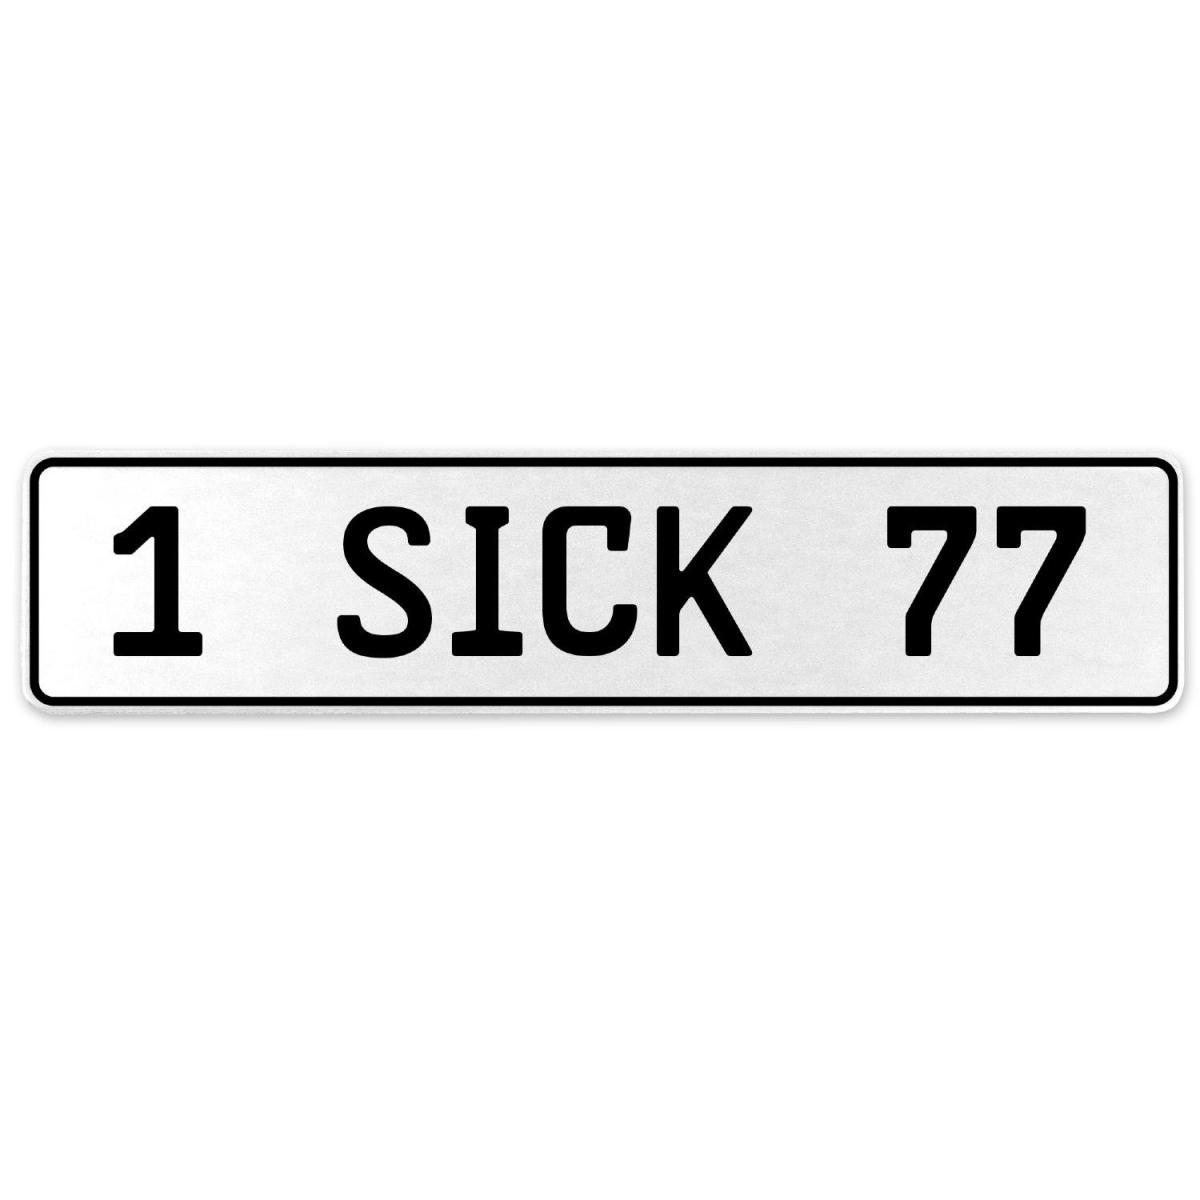 554476 1 Sick 77 - White Aluminum Street Sign Mancave Euro Plate Name Door Sign Wall